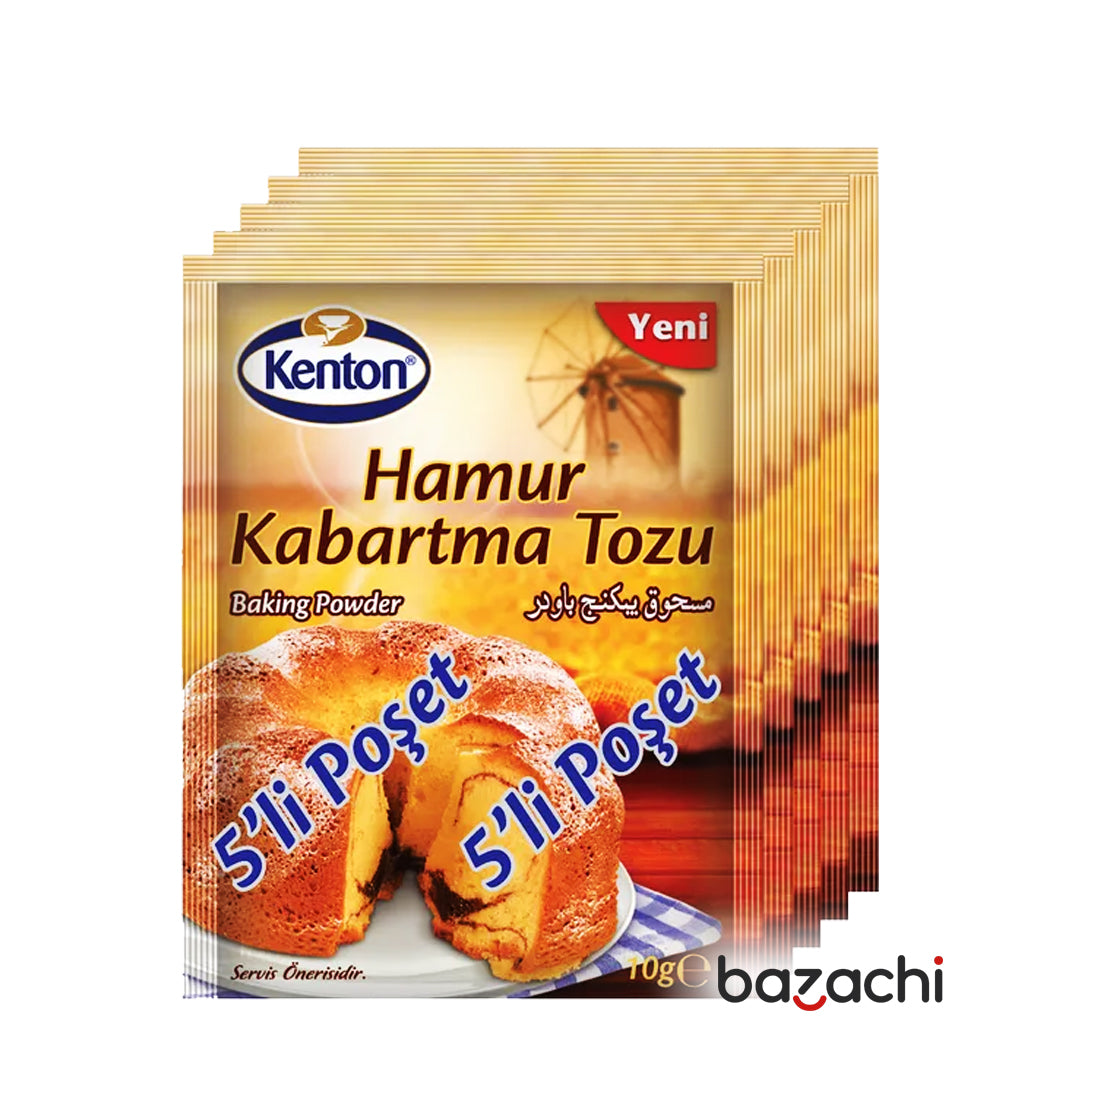 Kenton Baking Powder Kabartma Tozu  5x10g